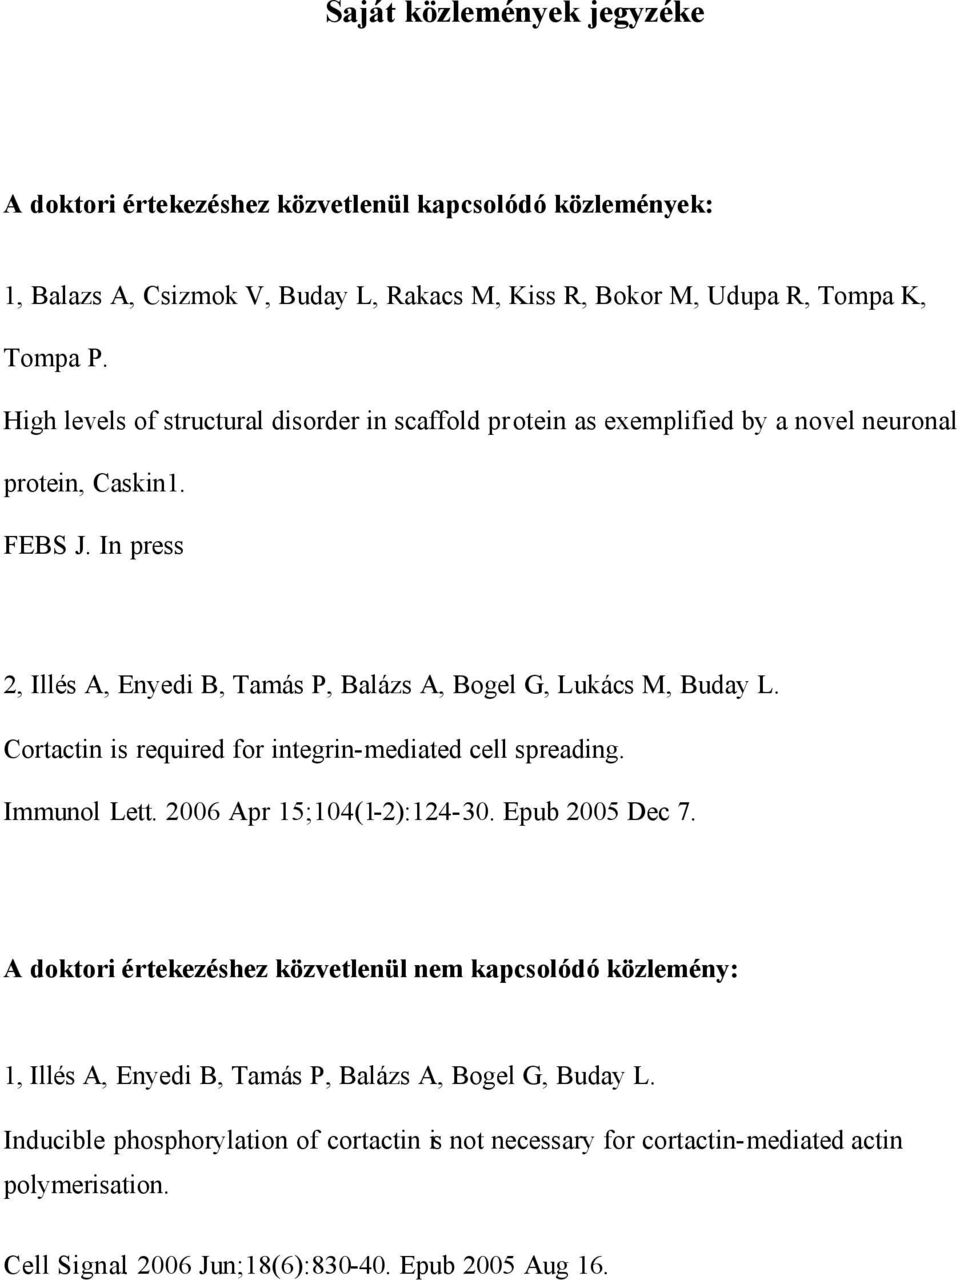 In press 2, Illés A, Enyedi B, Tamás P, Balázs A, Bogel G, Lukács M, Buday L. Cortactin is required for integrin-mediated cell spreading. Immunol Lett. 2006 Apr 15;104(1-2):124-30.